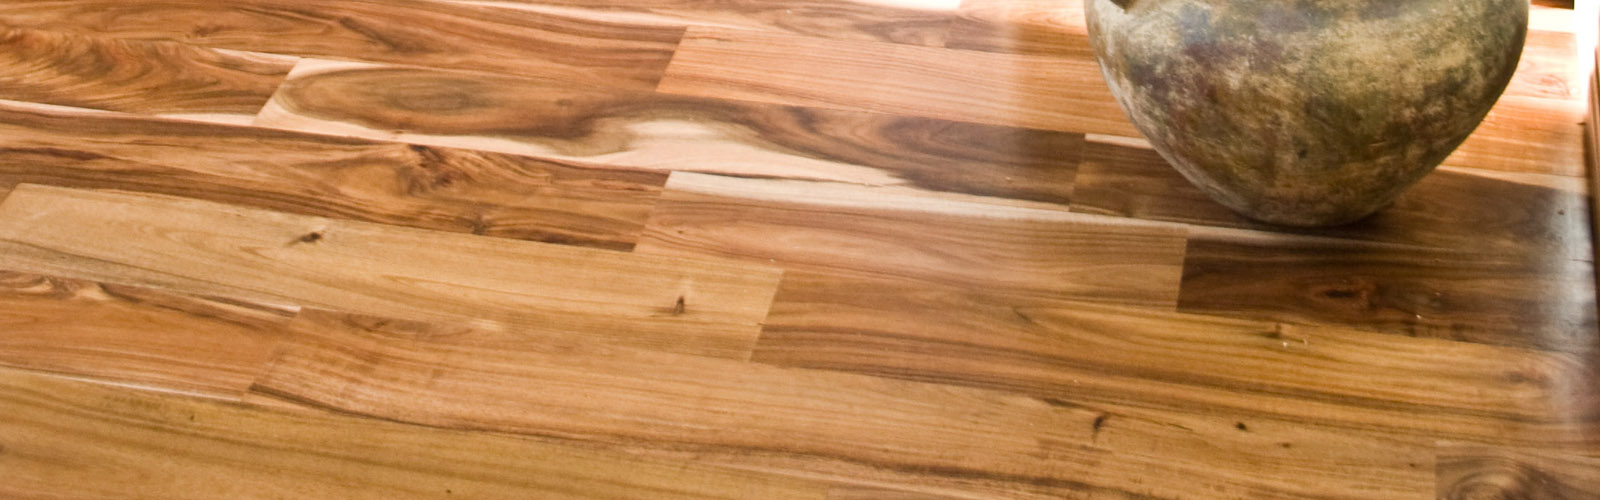 Magnus Anderson Hardwood Flooring Dustless Refinishing Wood